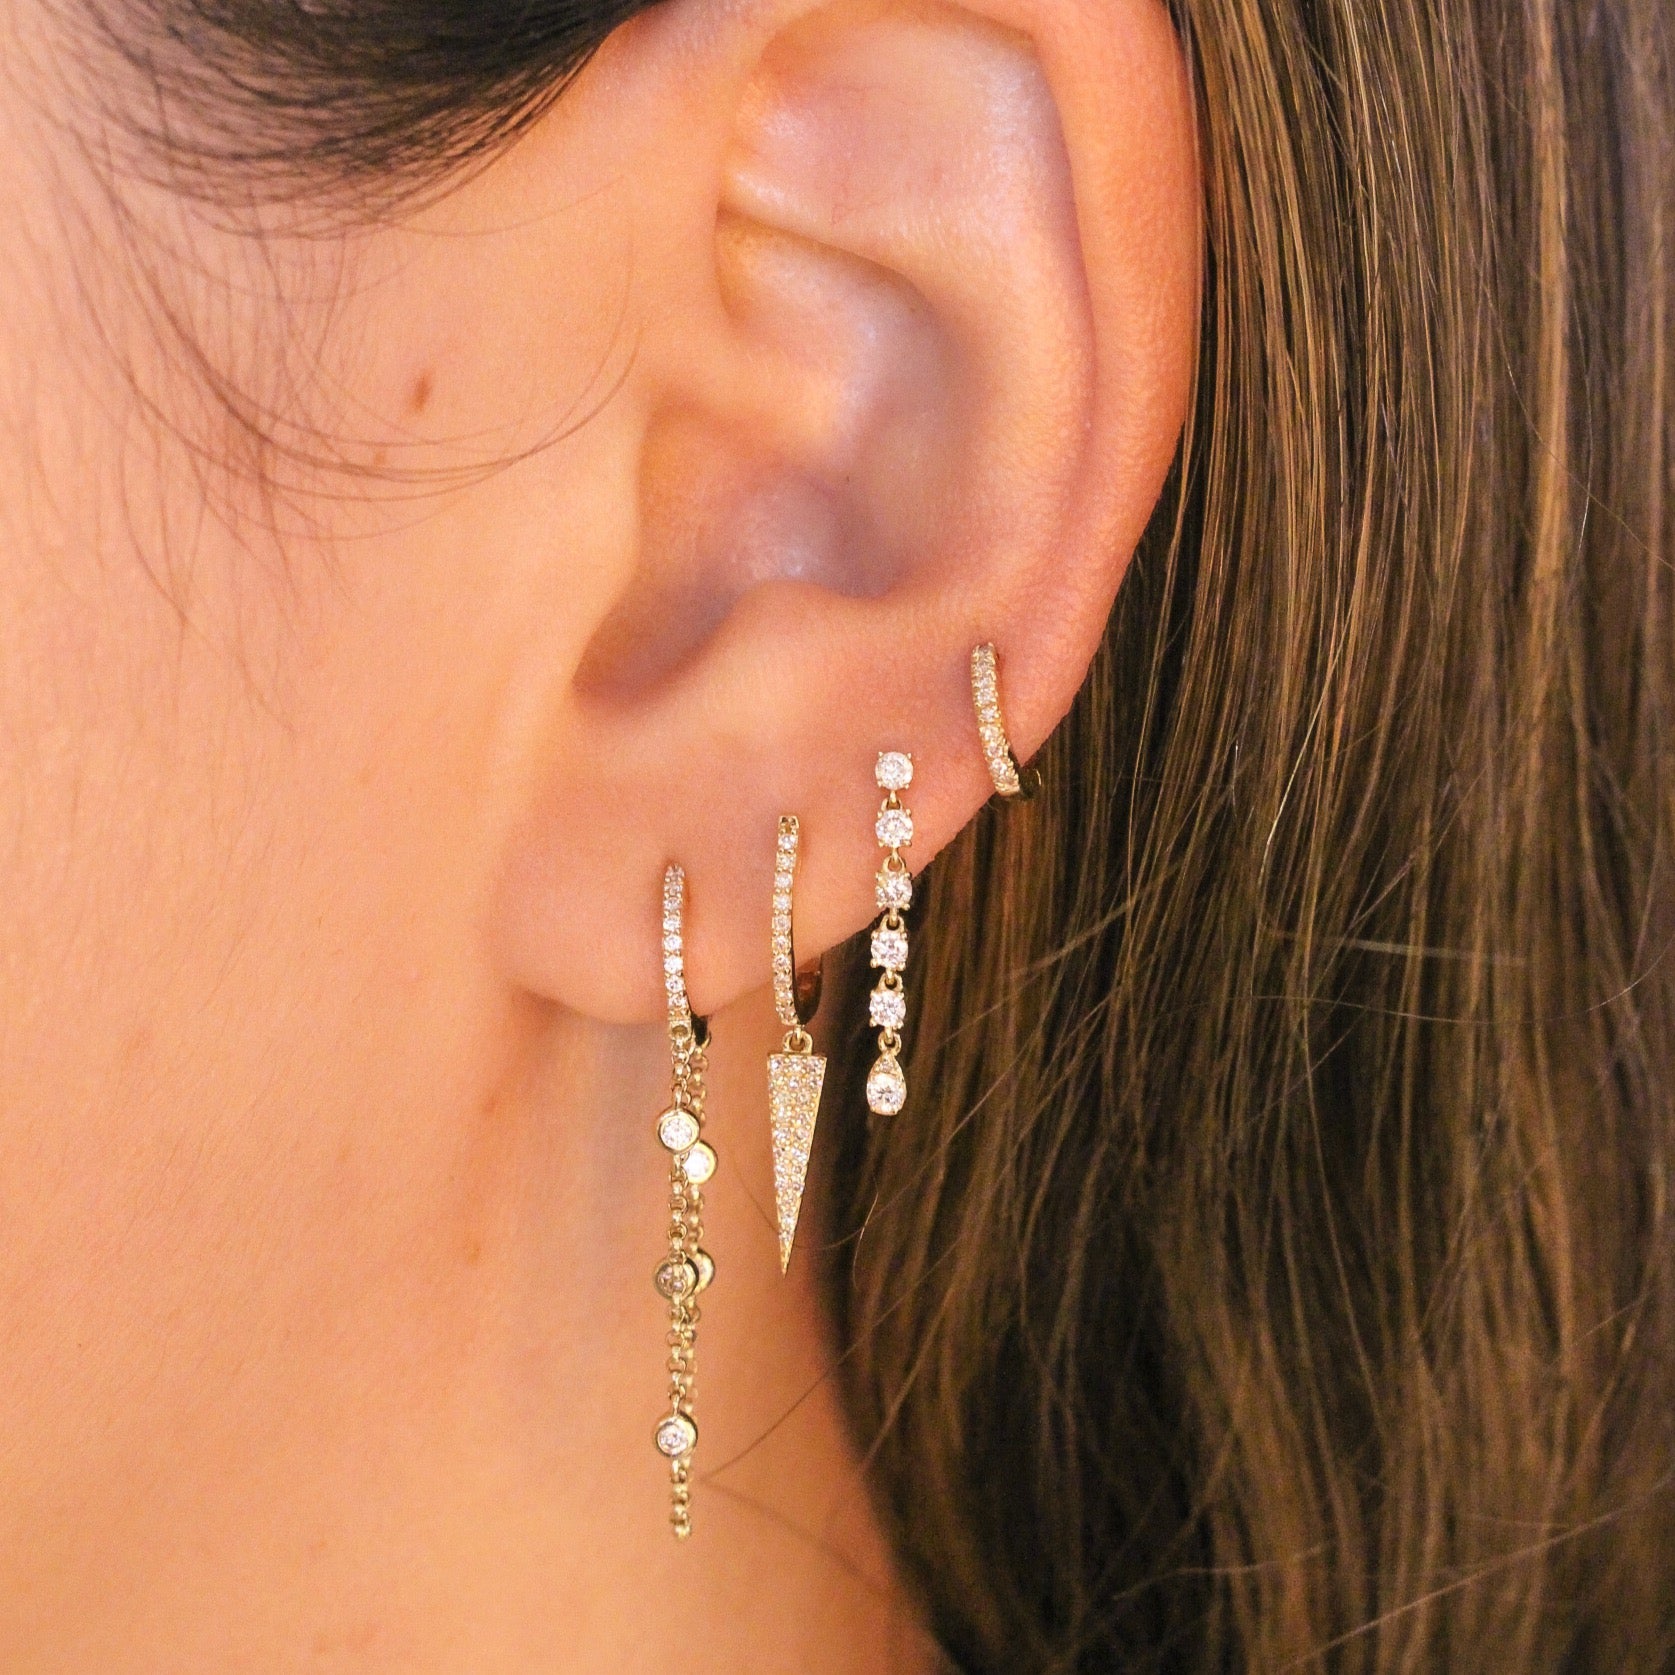 Gold Diamond Spike Hoop Earrings - 14KT Gold - Monisha Melwani Jewelry